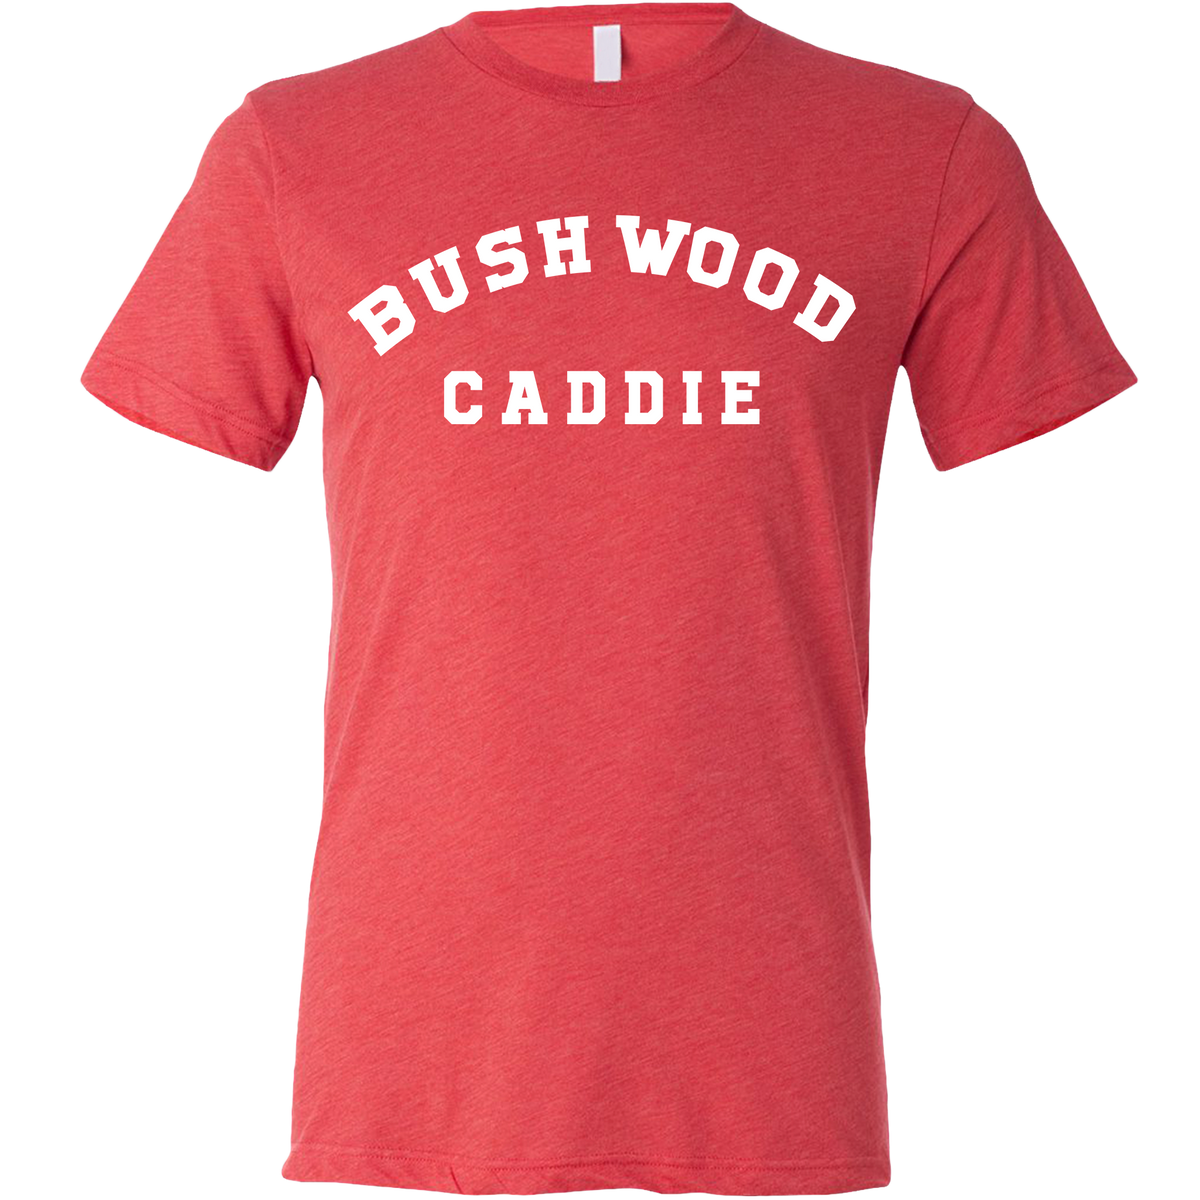 Bushwood Caddie Golf T-Shirt